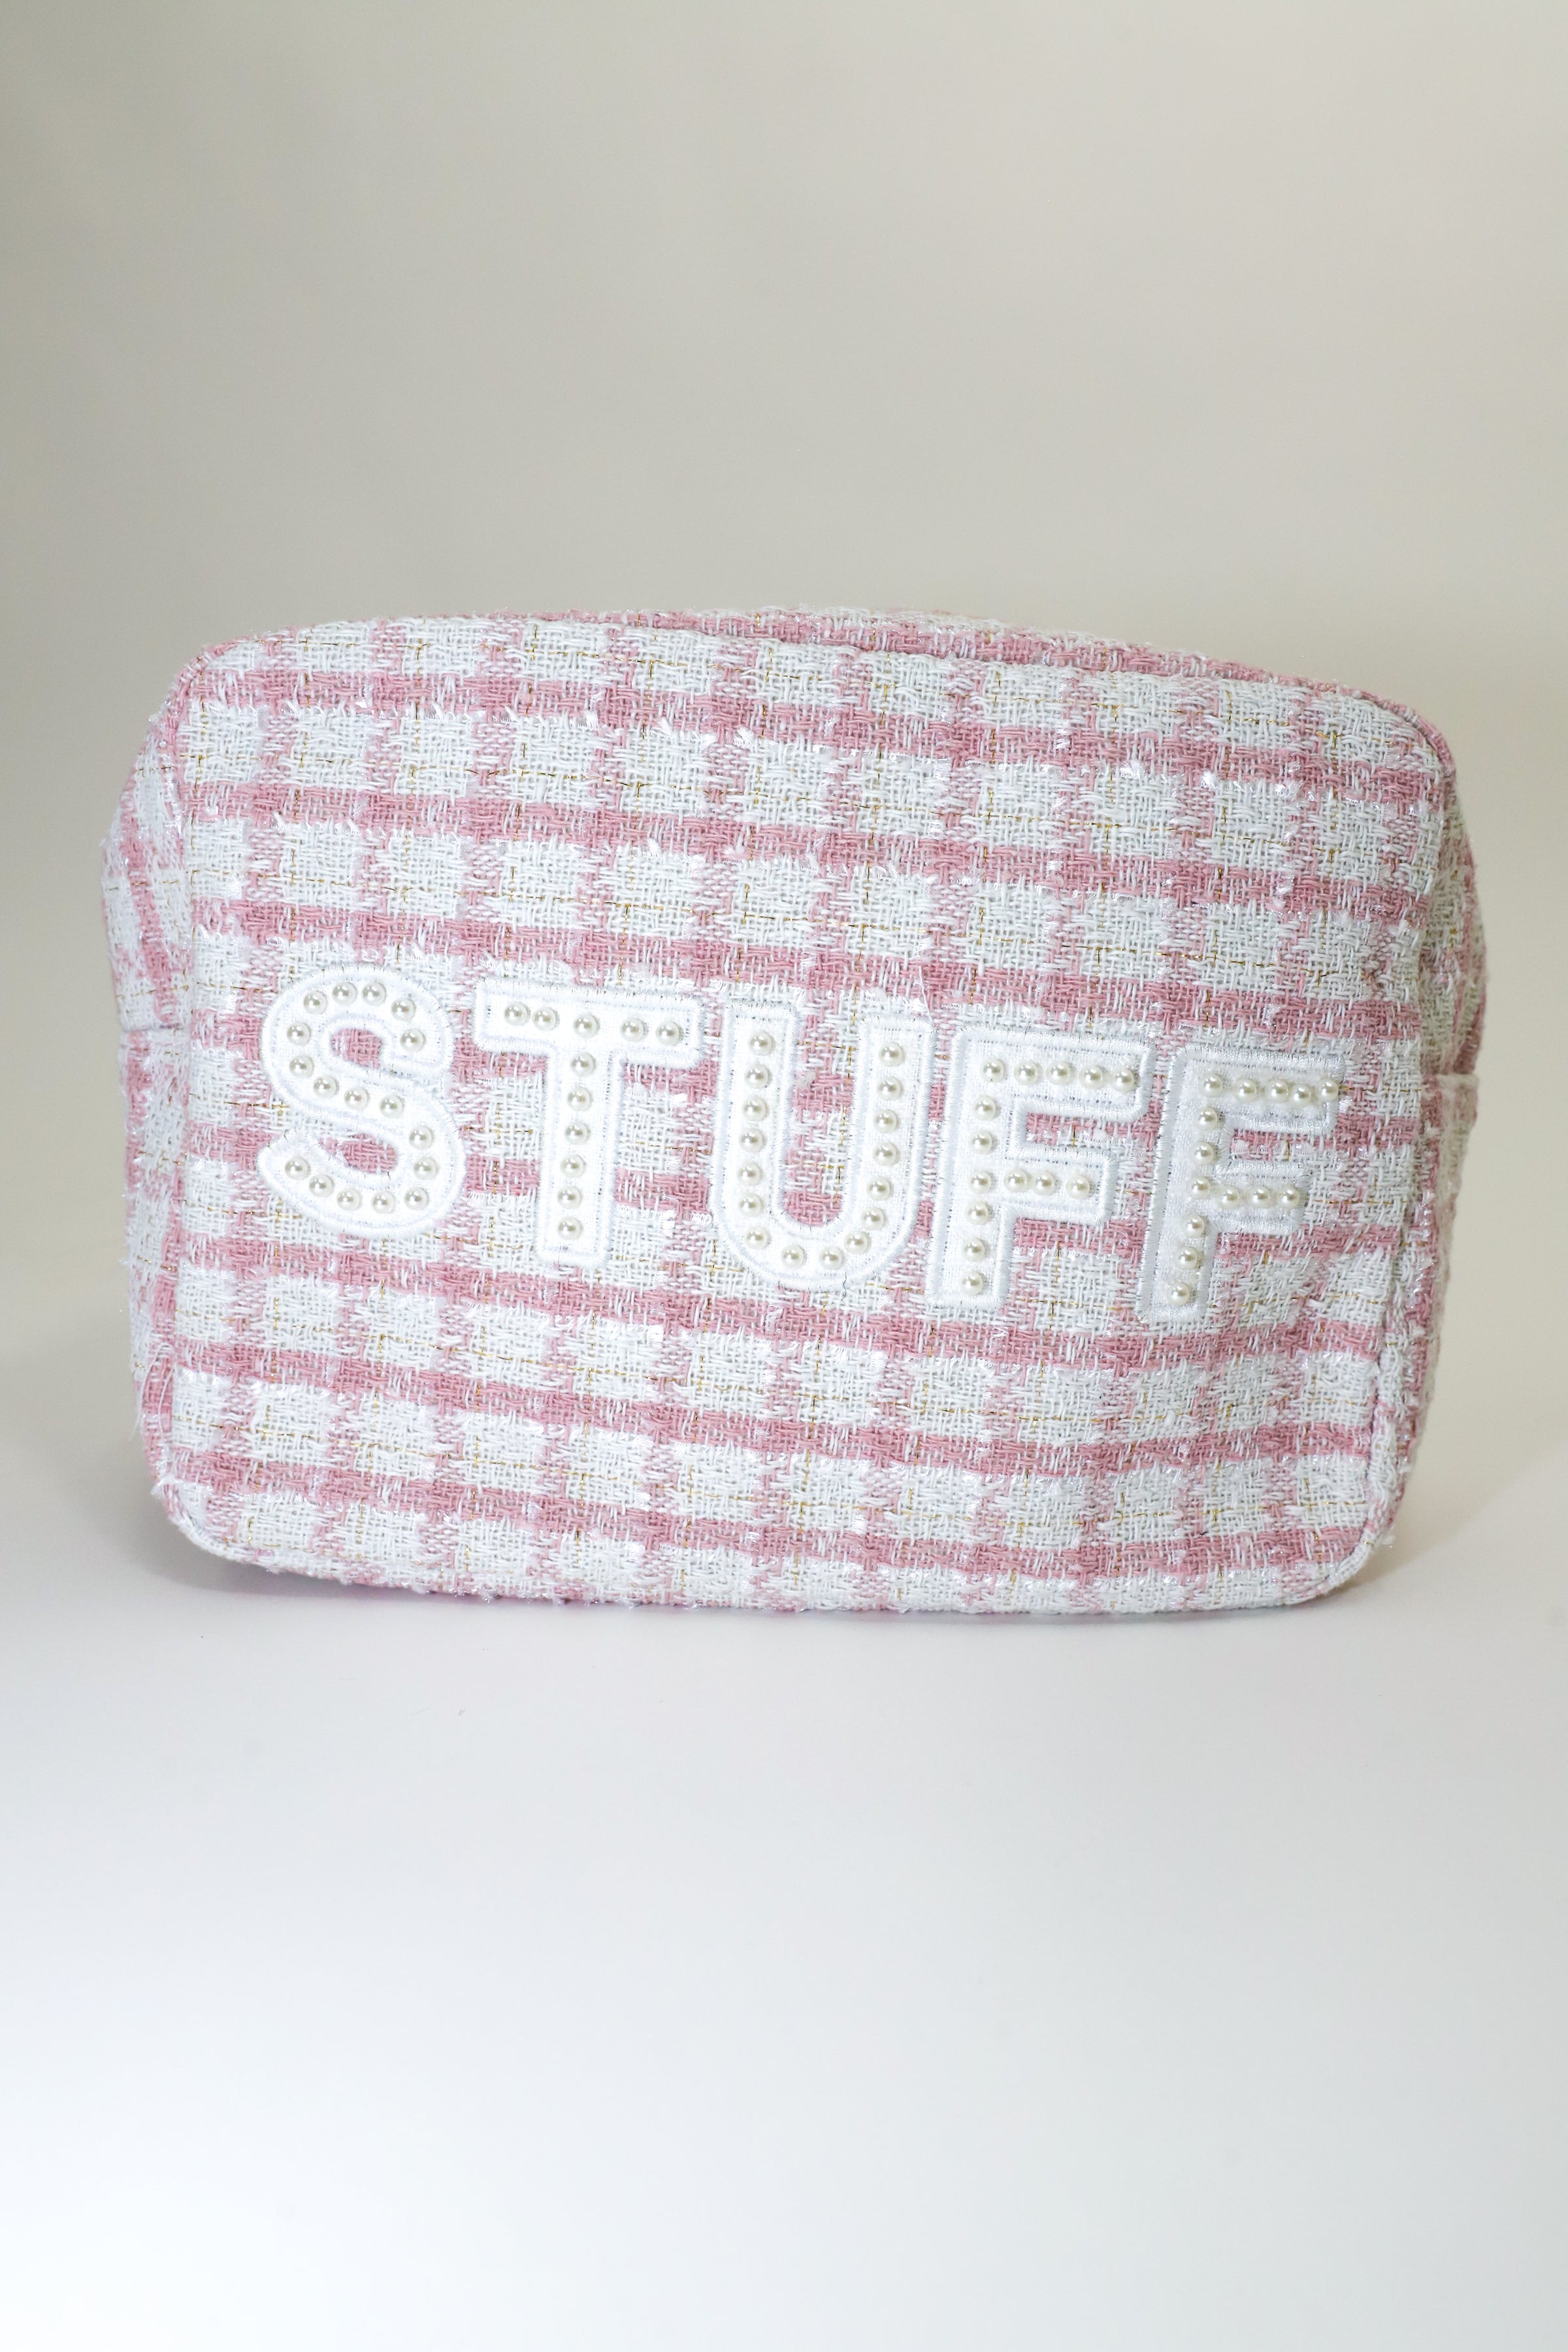 Stuff XL Bag Pink Plaid